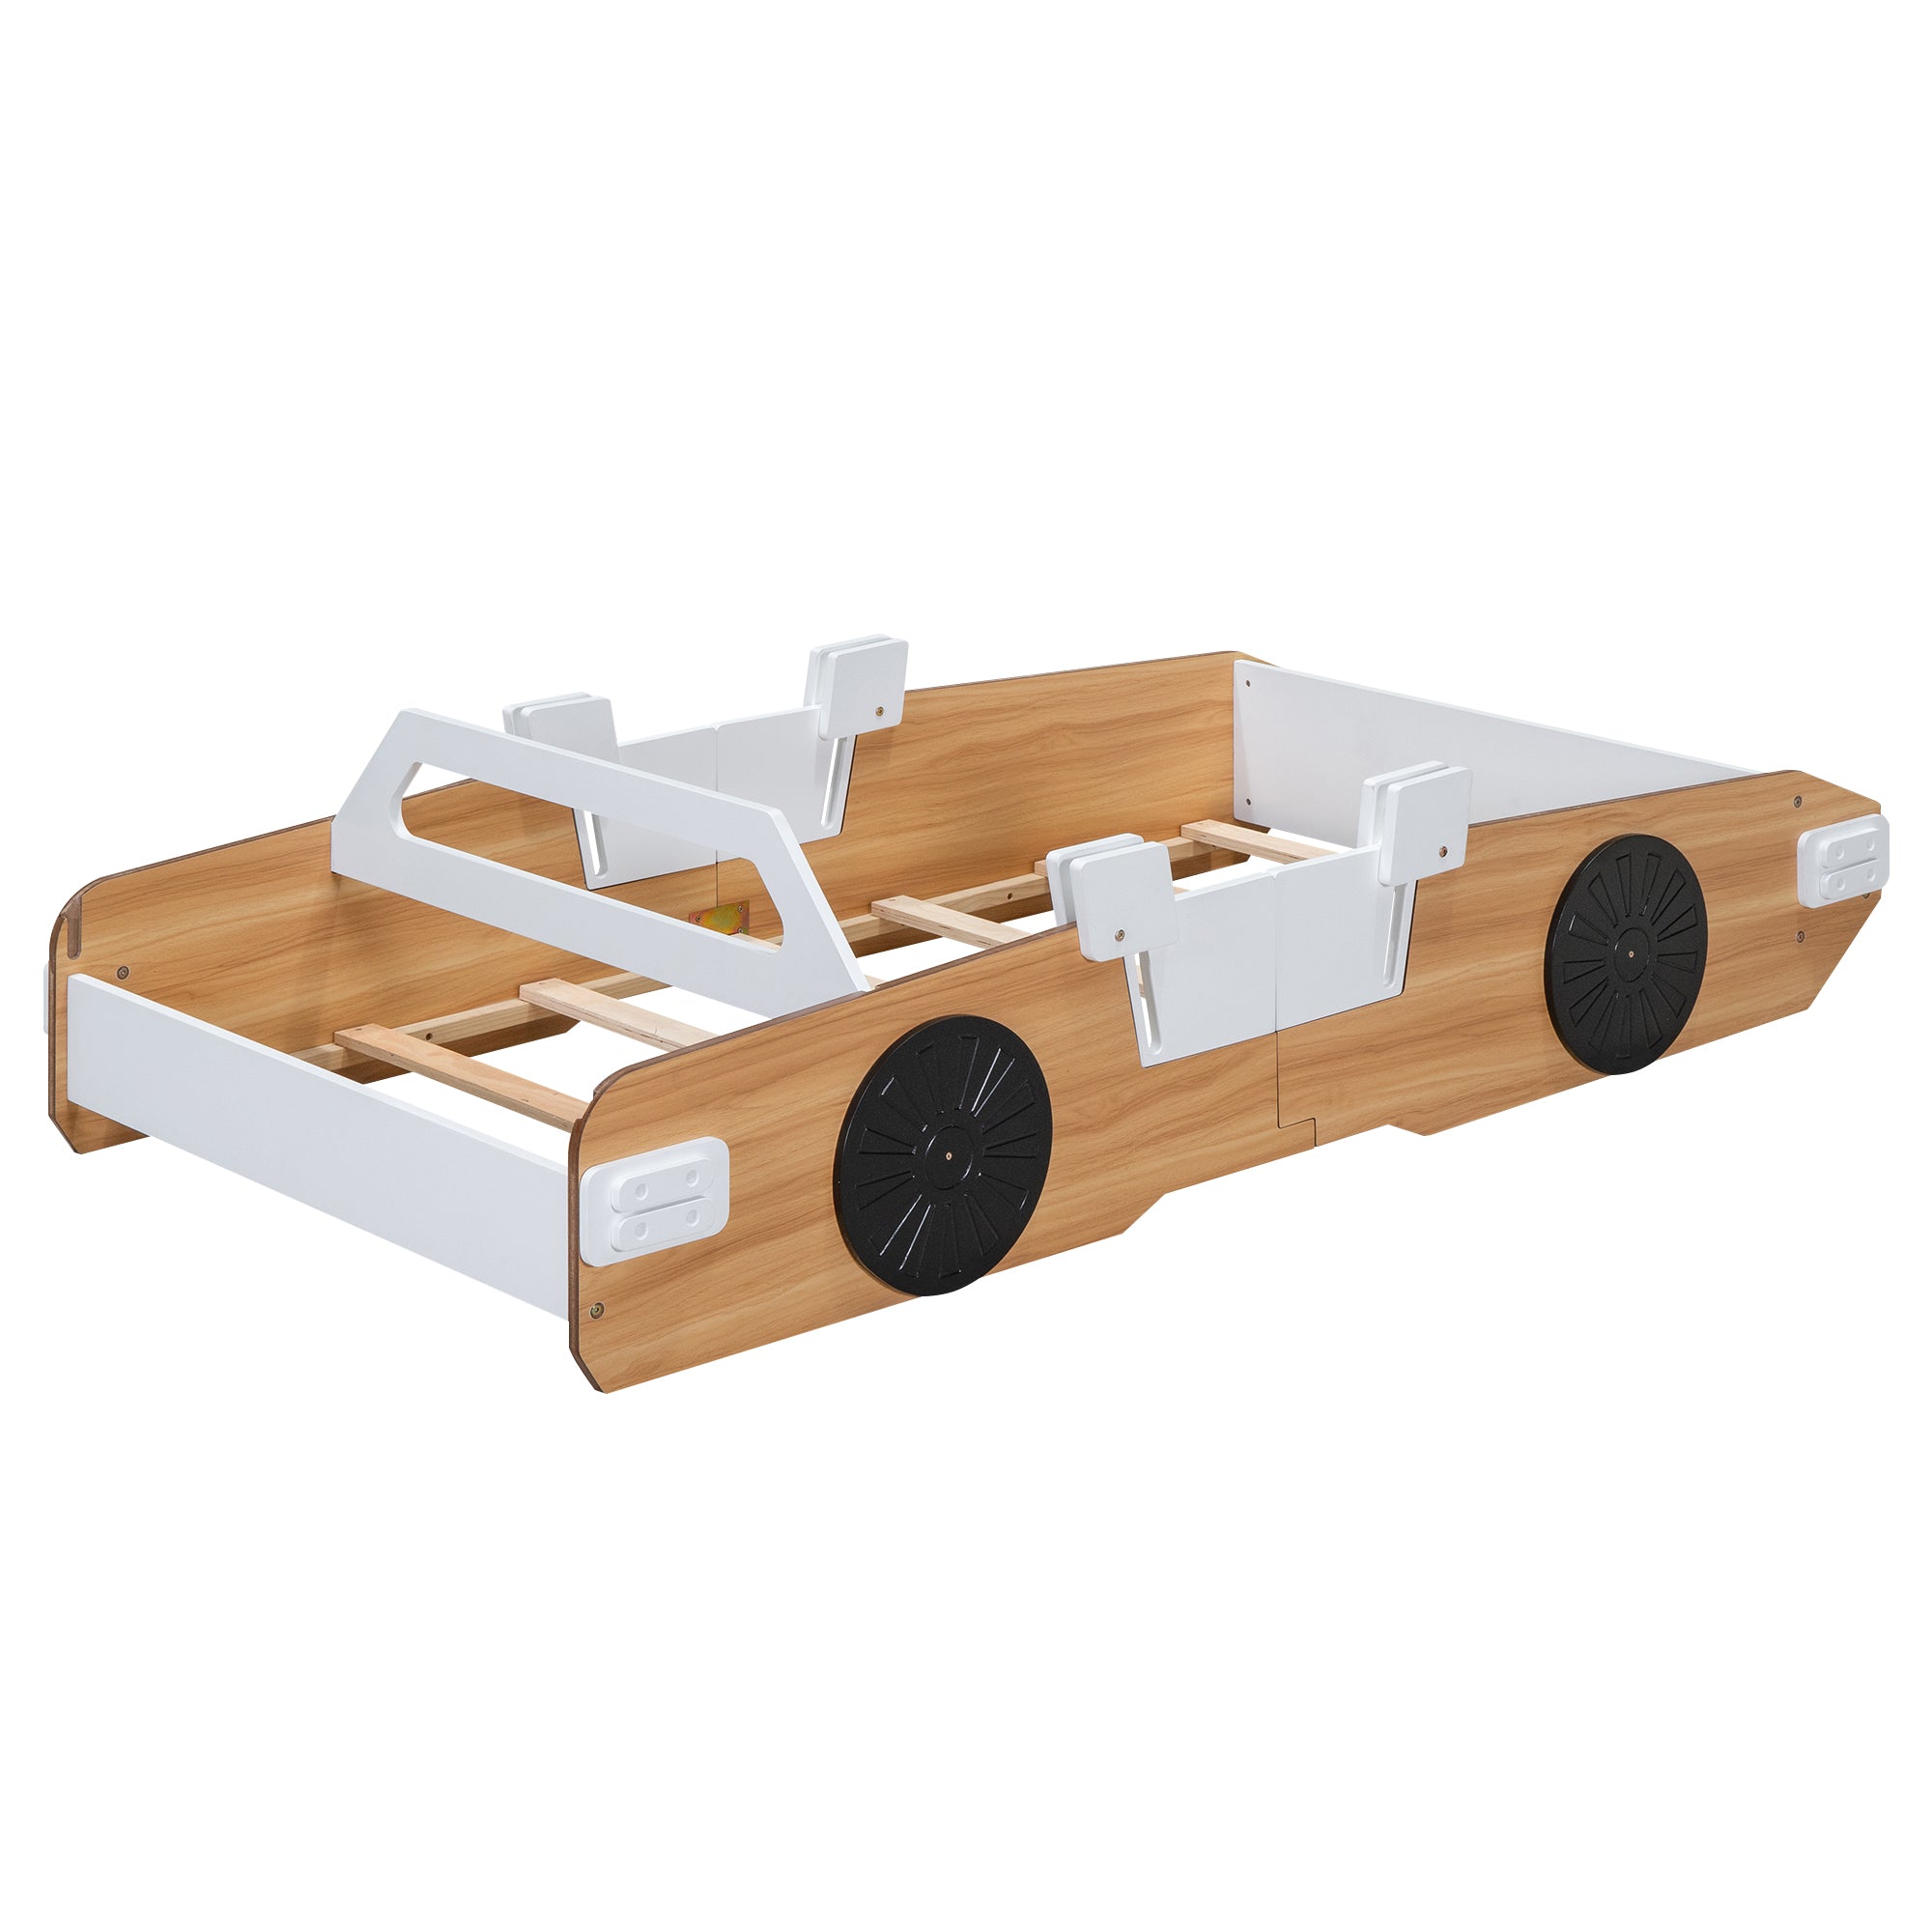 Bellemave Wood Twin Size Racing Car Bed with Door Design and Storage